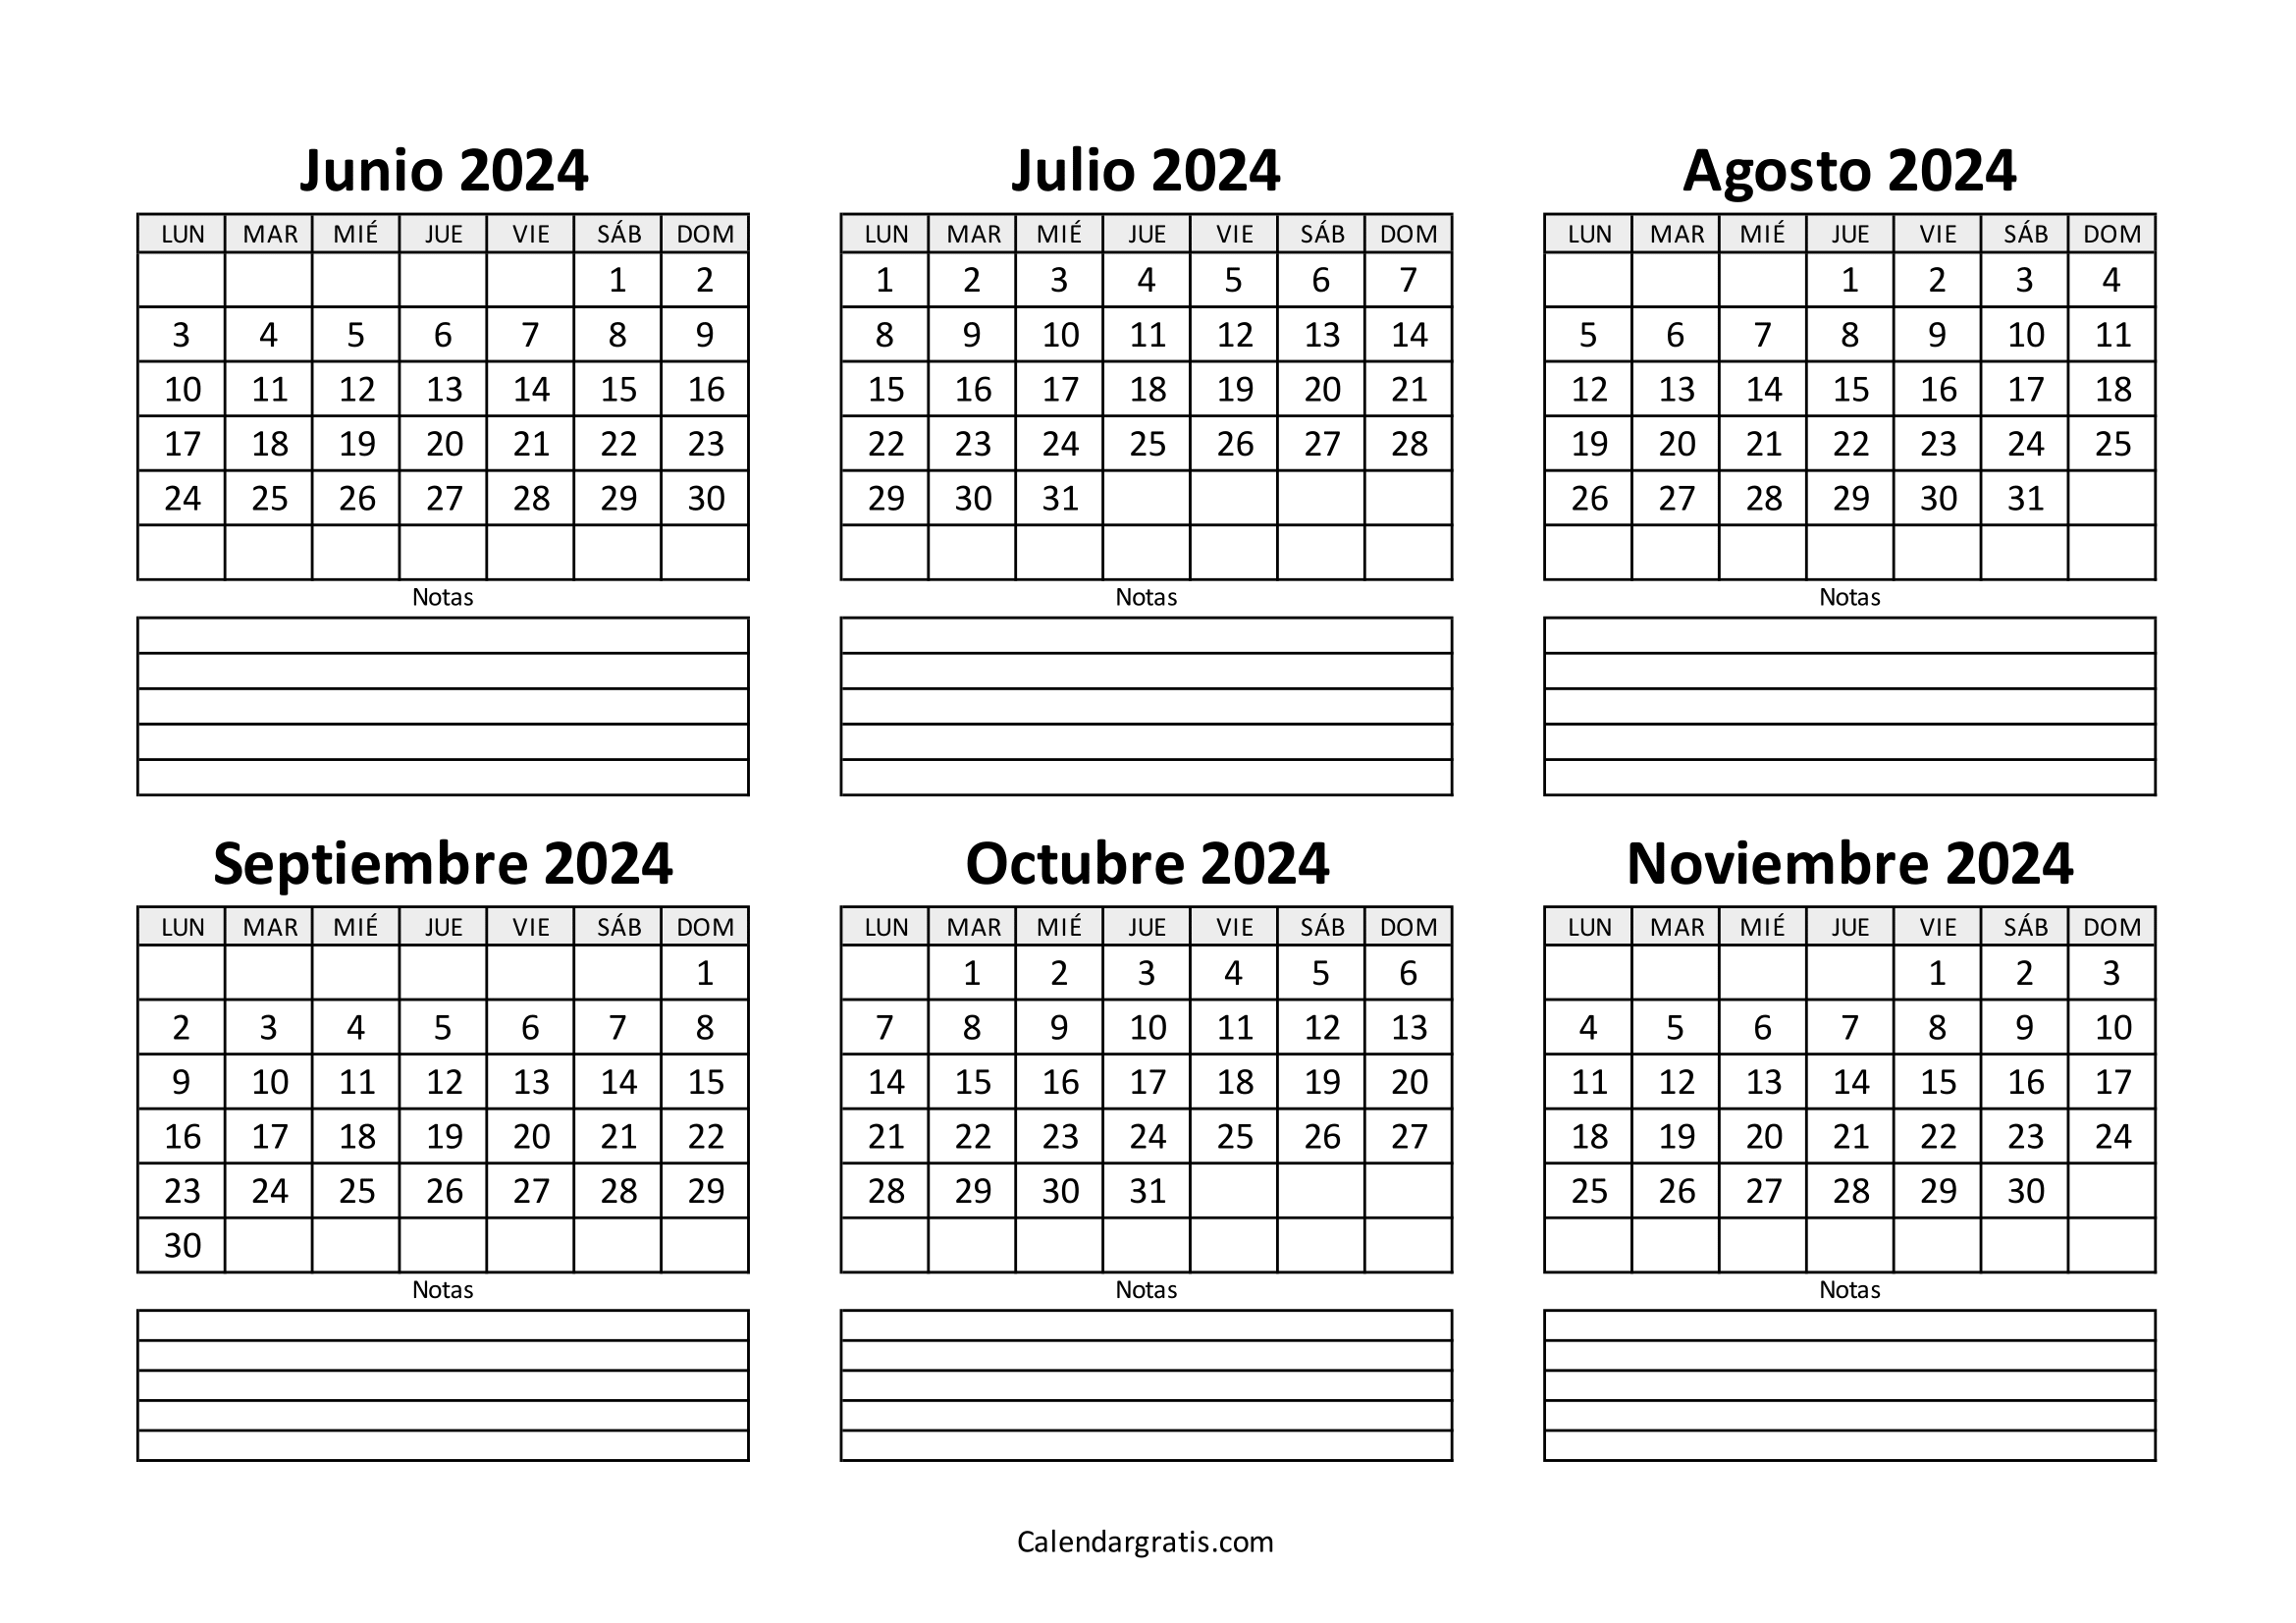 Calendario junio a noviembre 2024 México